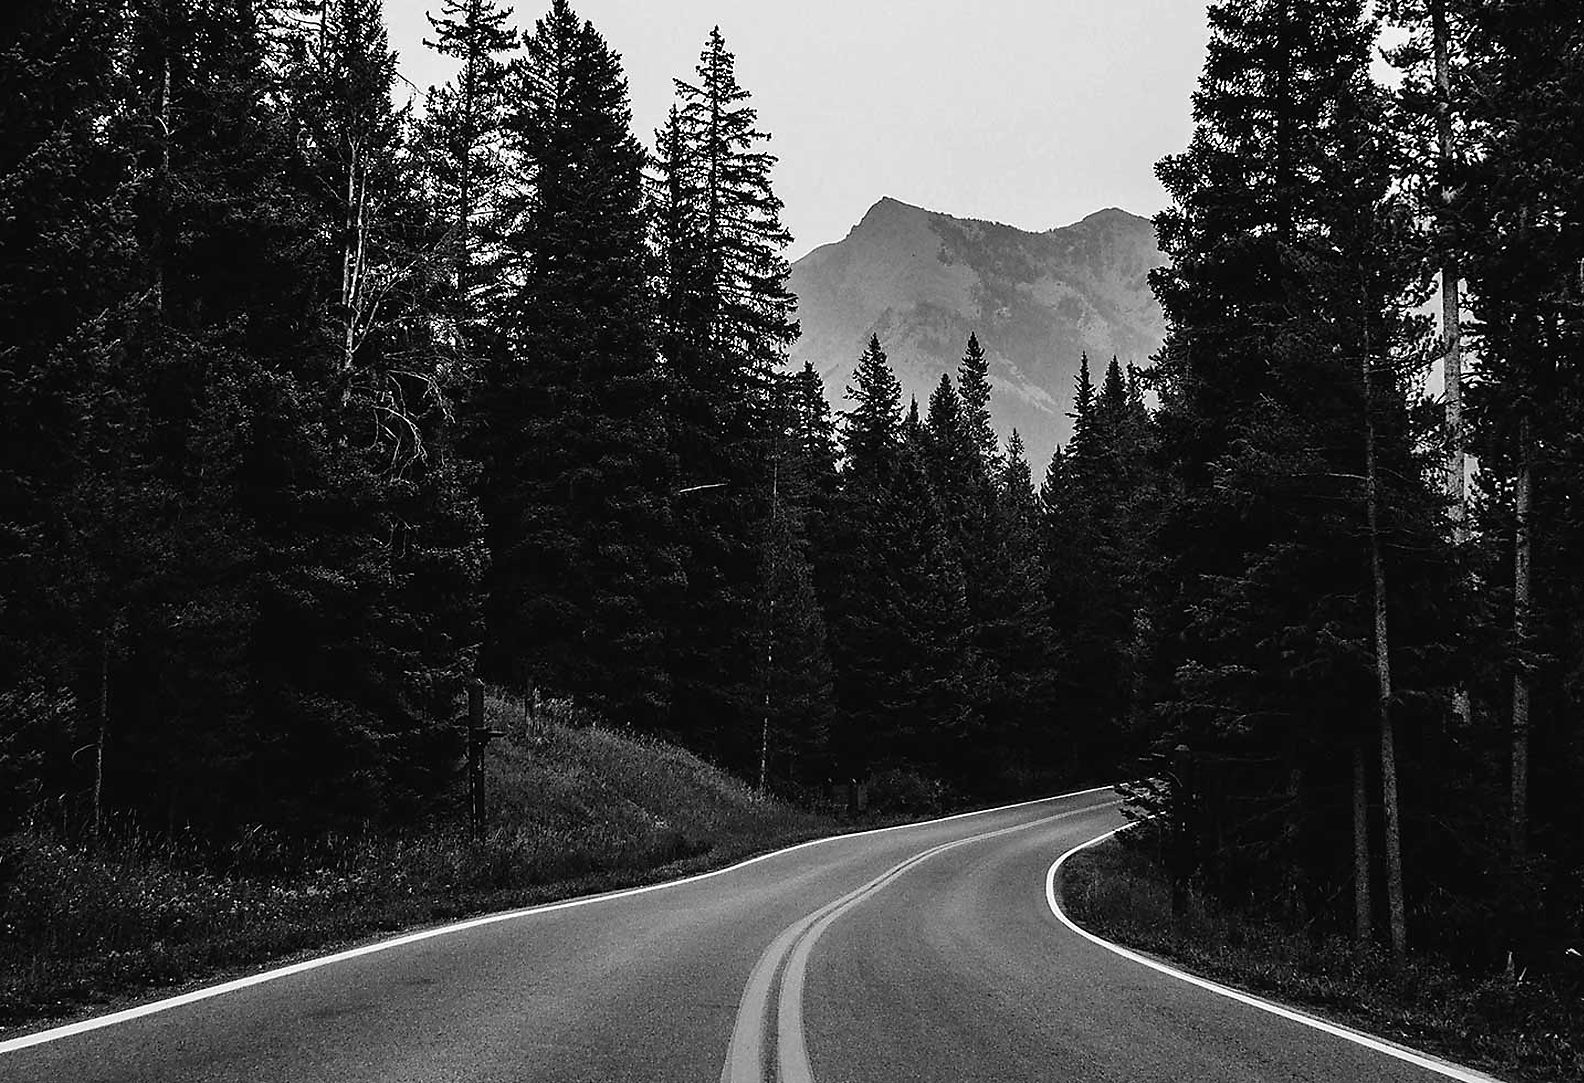 Gambar hitam-putih jalan menikung yang dikelilingi pepohonan dengan latar belakang gunung